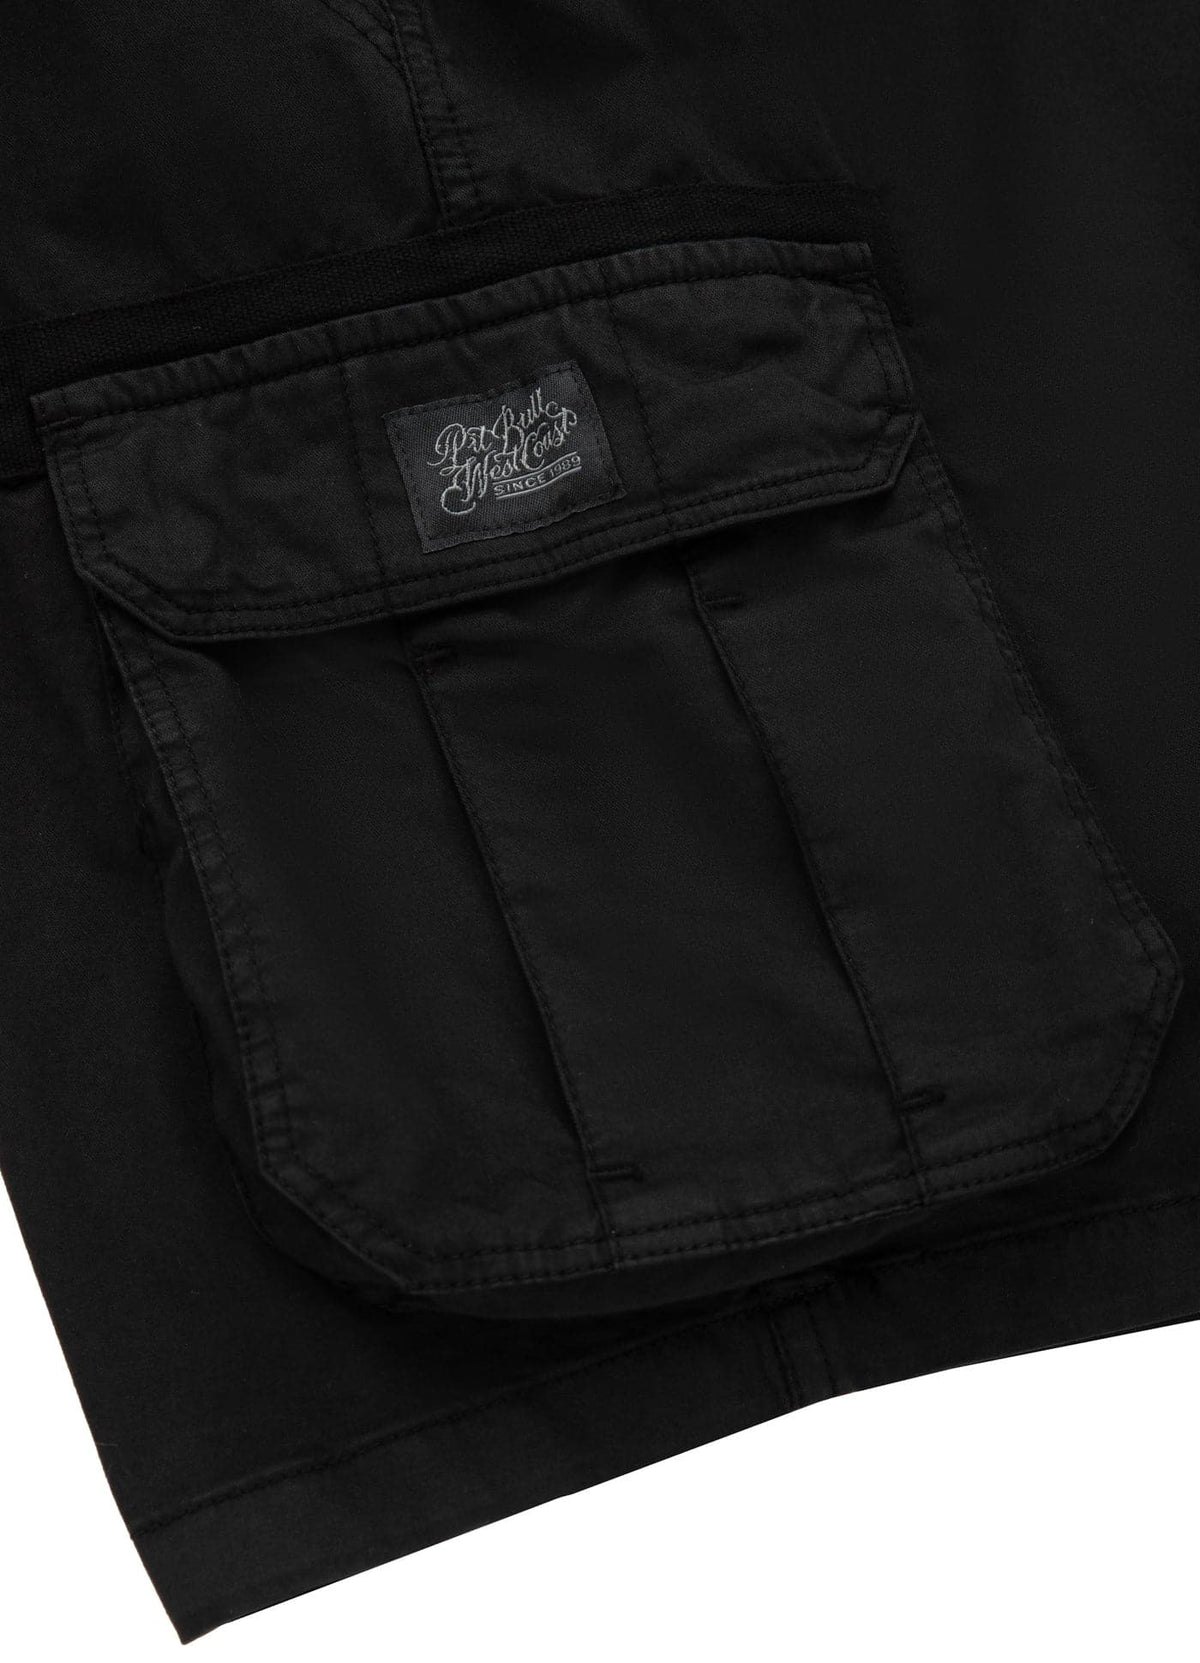 ARAGON Black Cargo Shorts